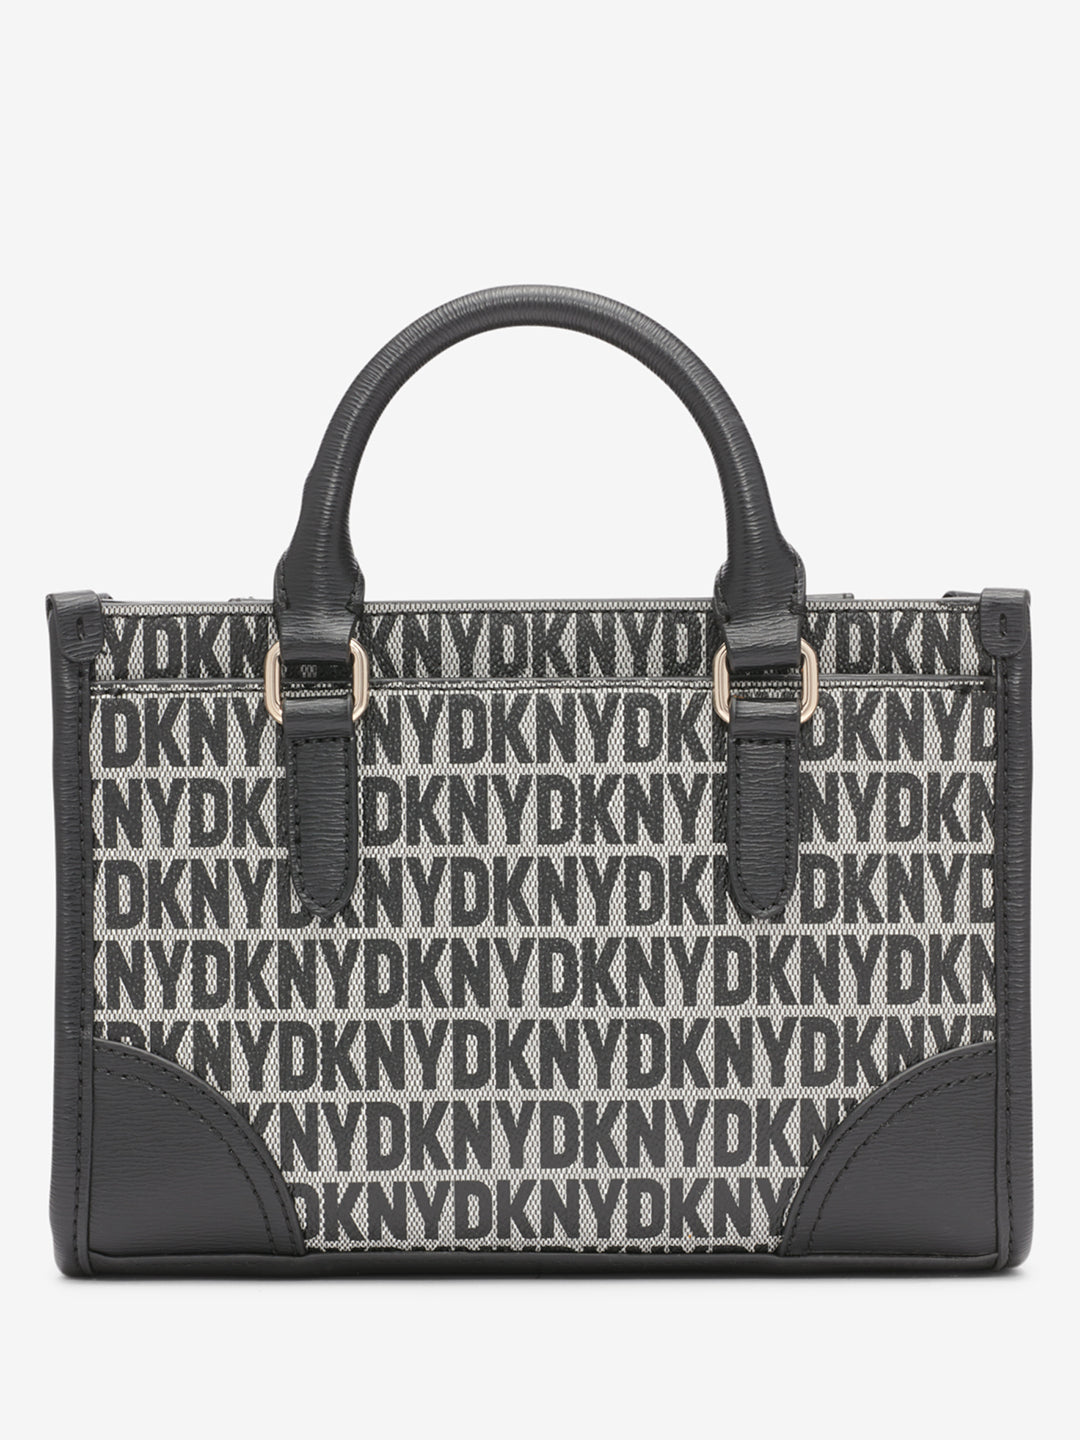 DKNY Women Black Printed Handbag